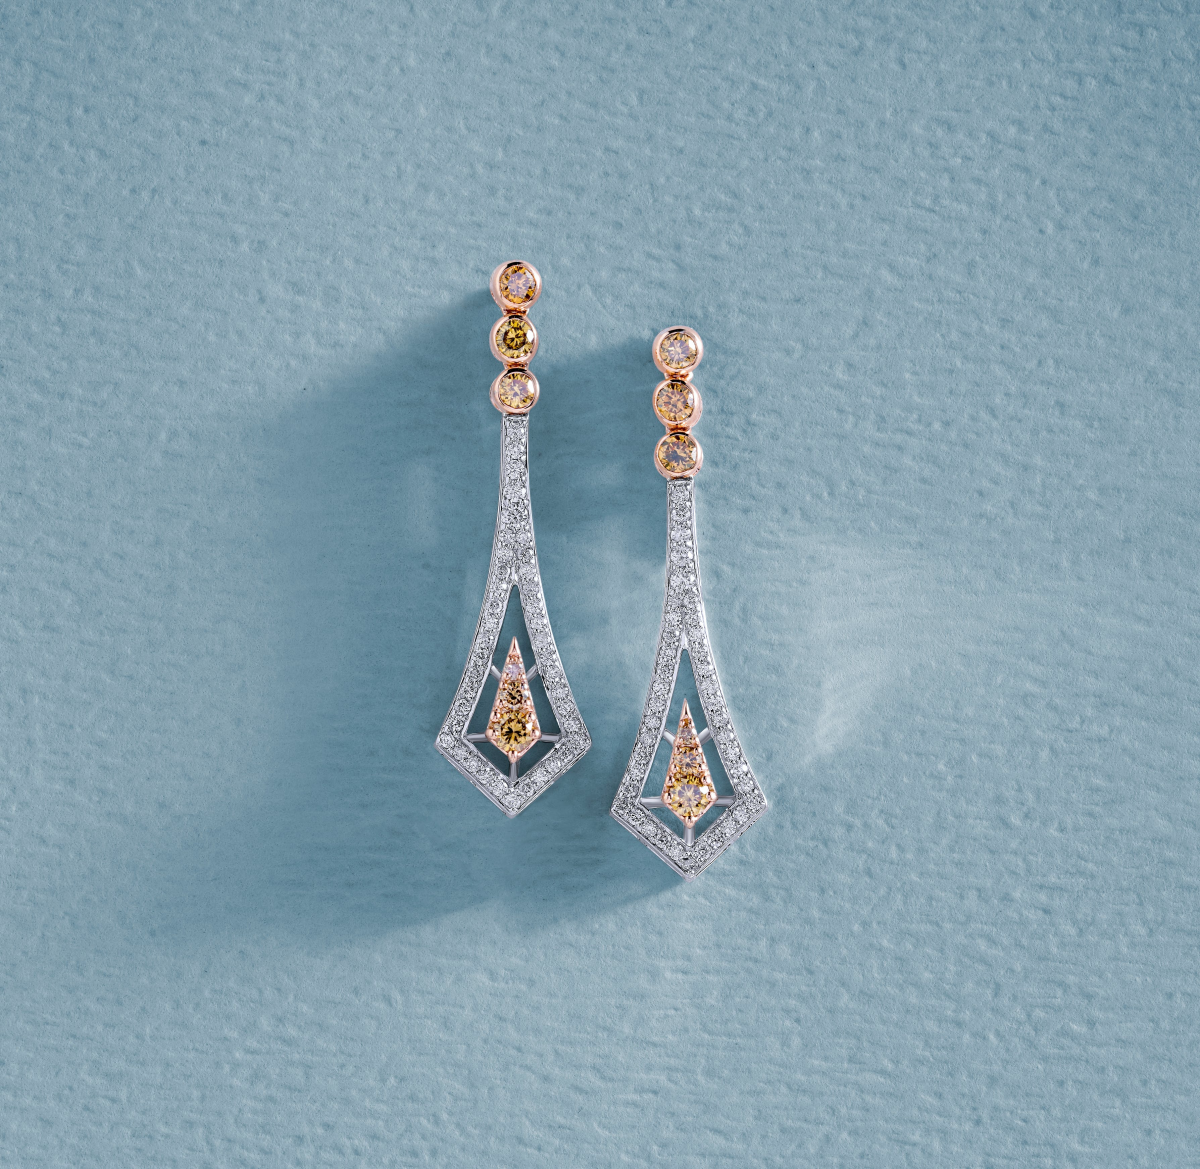 how to clean diamond earrings earrings with diamons